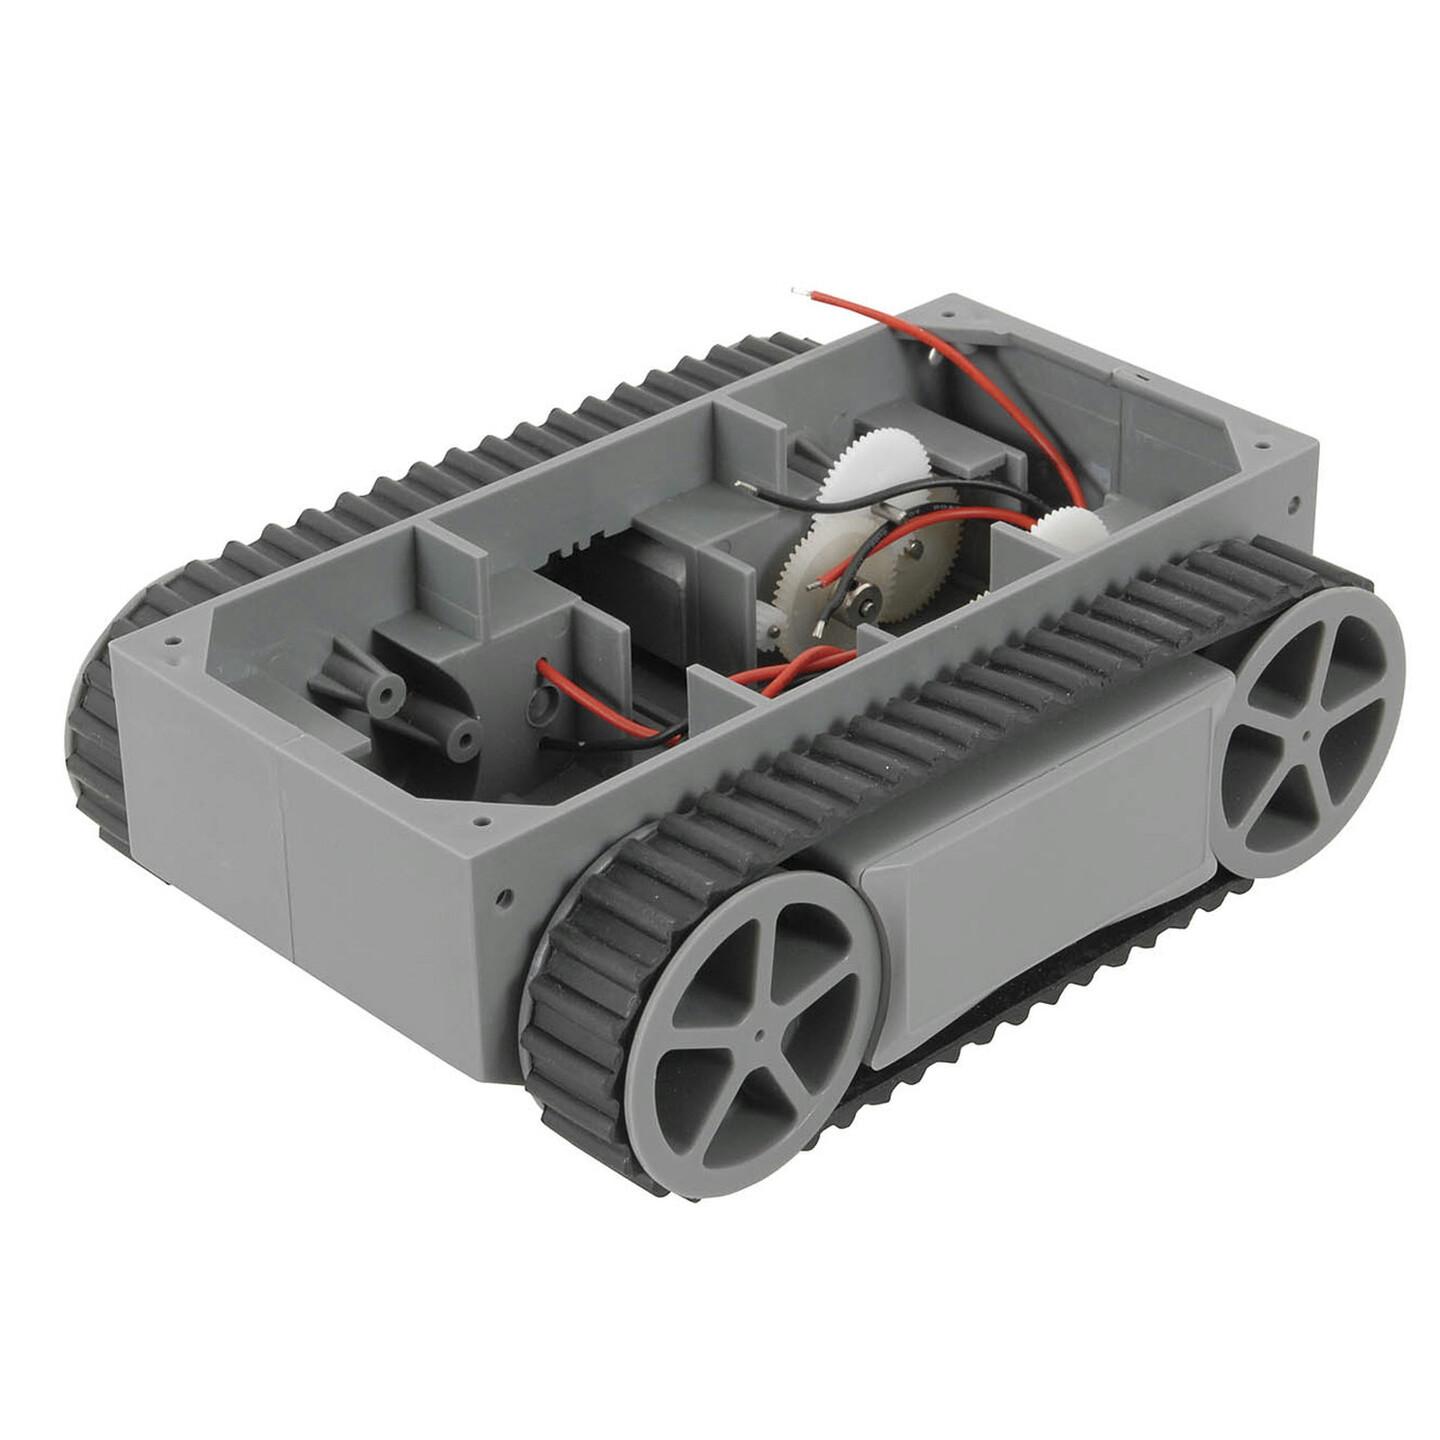 Robot Chassis/Platform - Heavy Duty